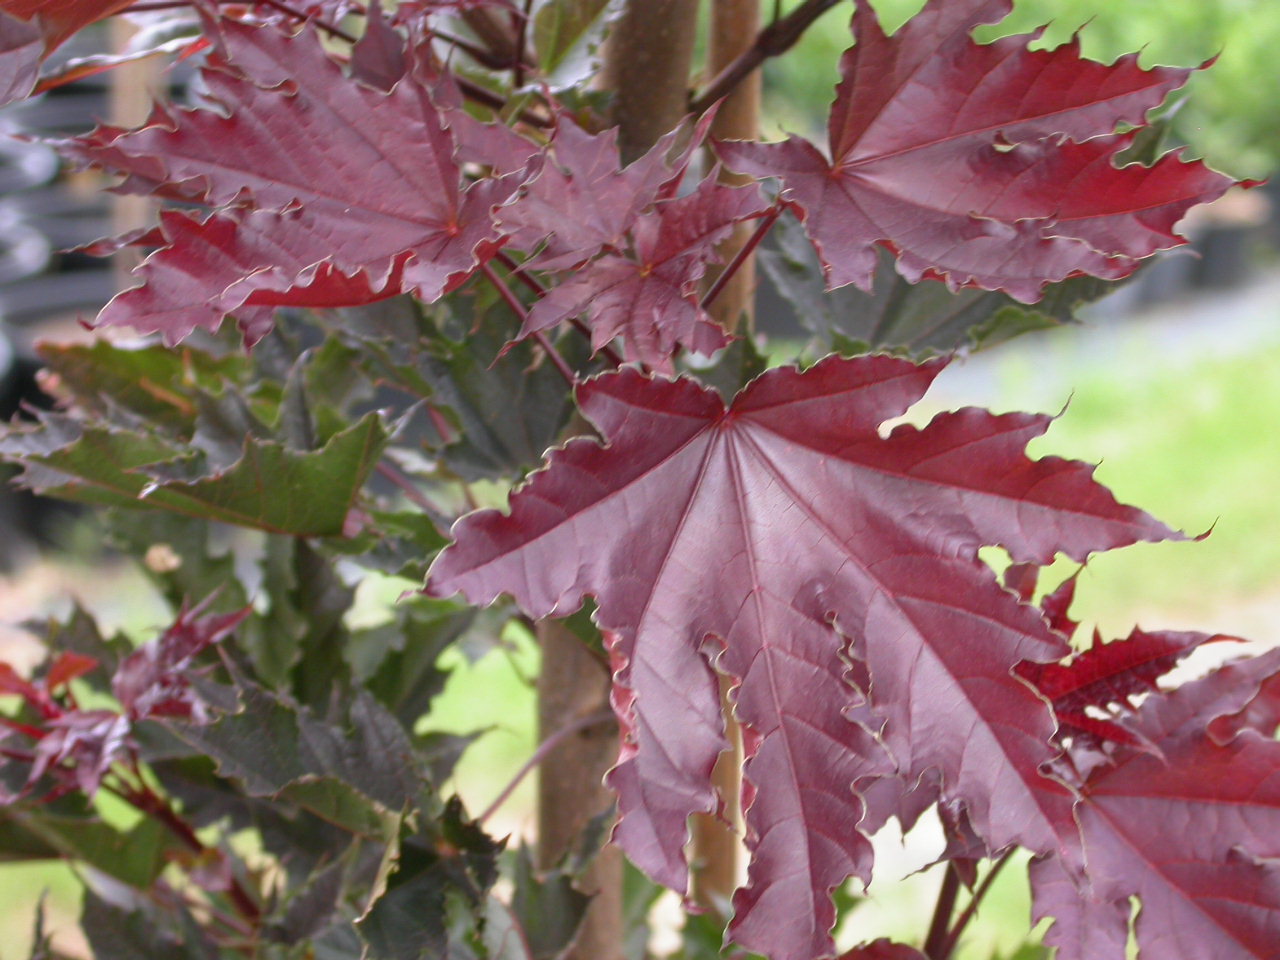 Crimson Sentry Norway Maple (Acer platanoides 'Crimson Sentry') - 25 Gallon Potted Tree